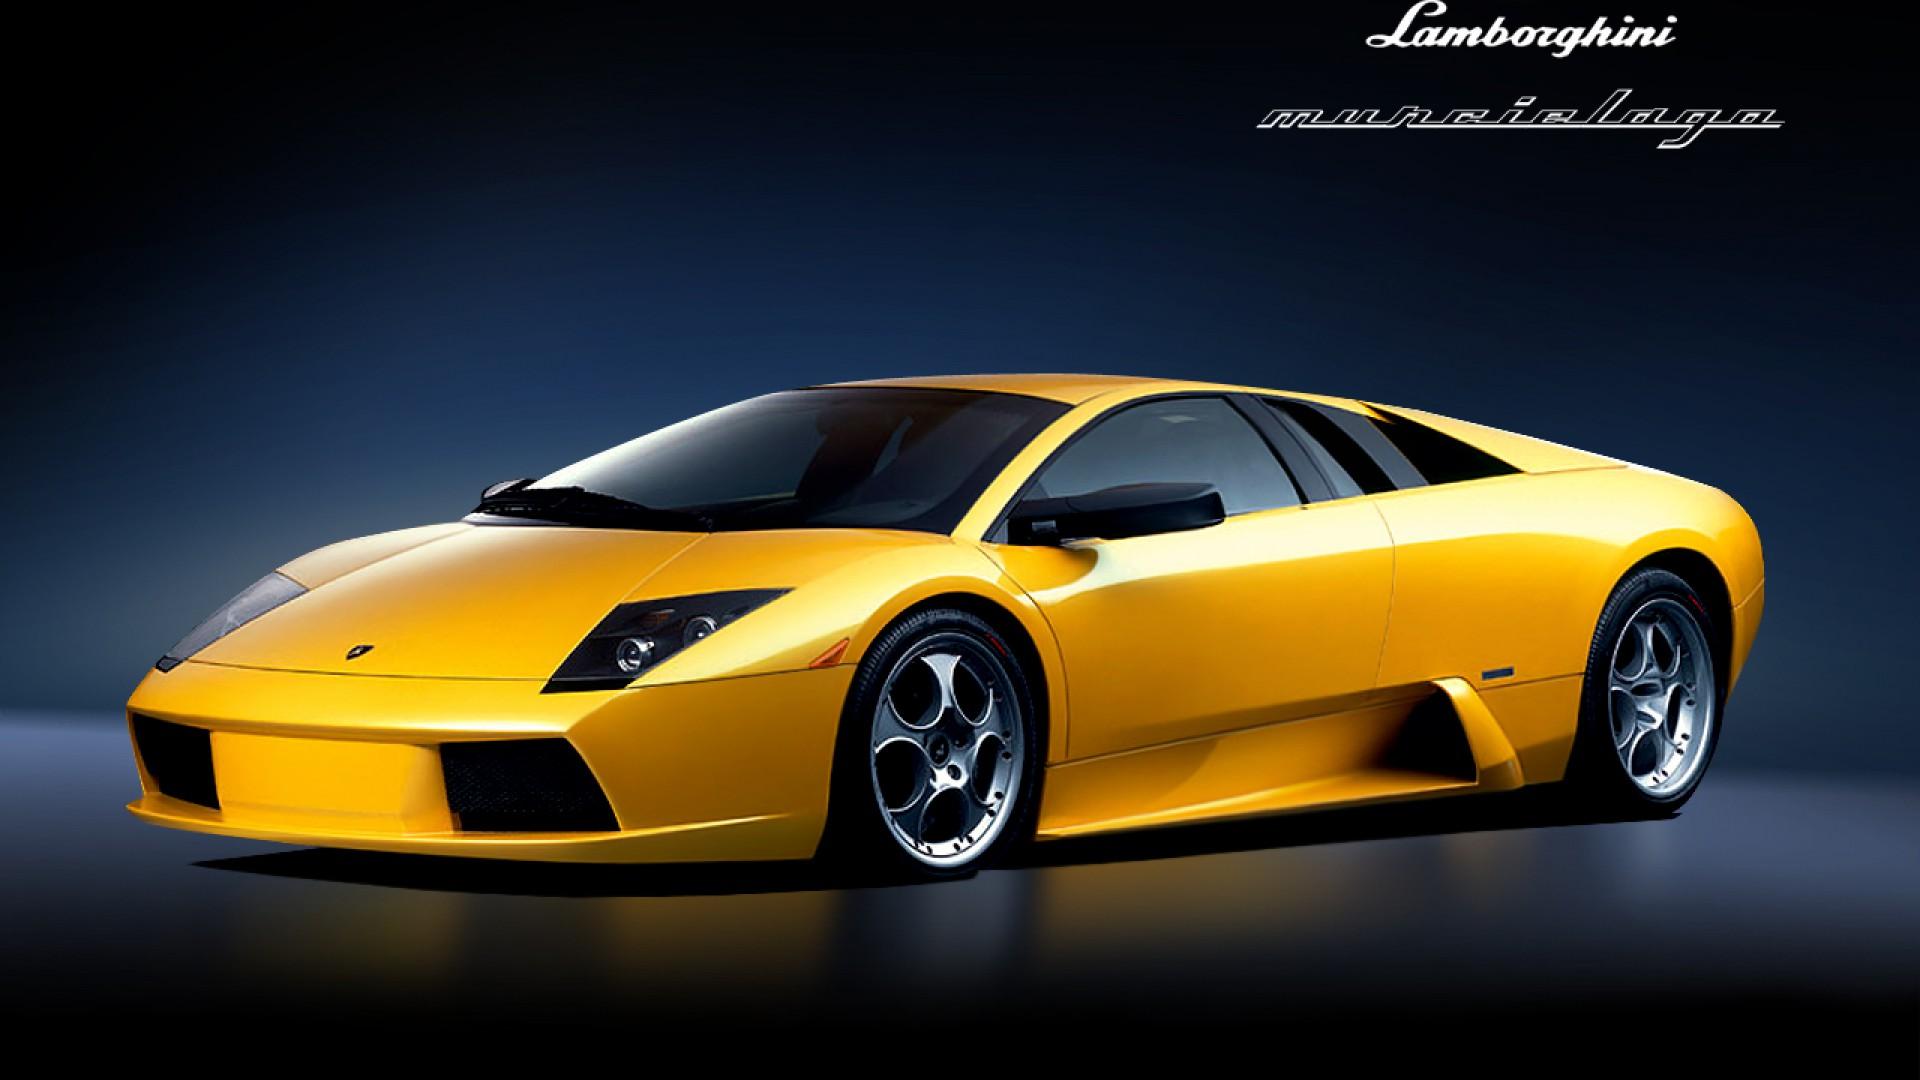 Top HDQ Cover Lamborghini Murcielago Image